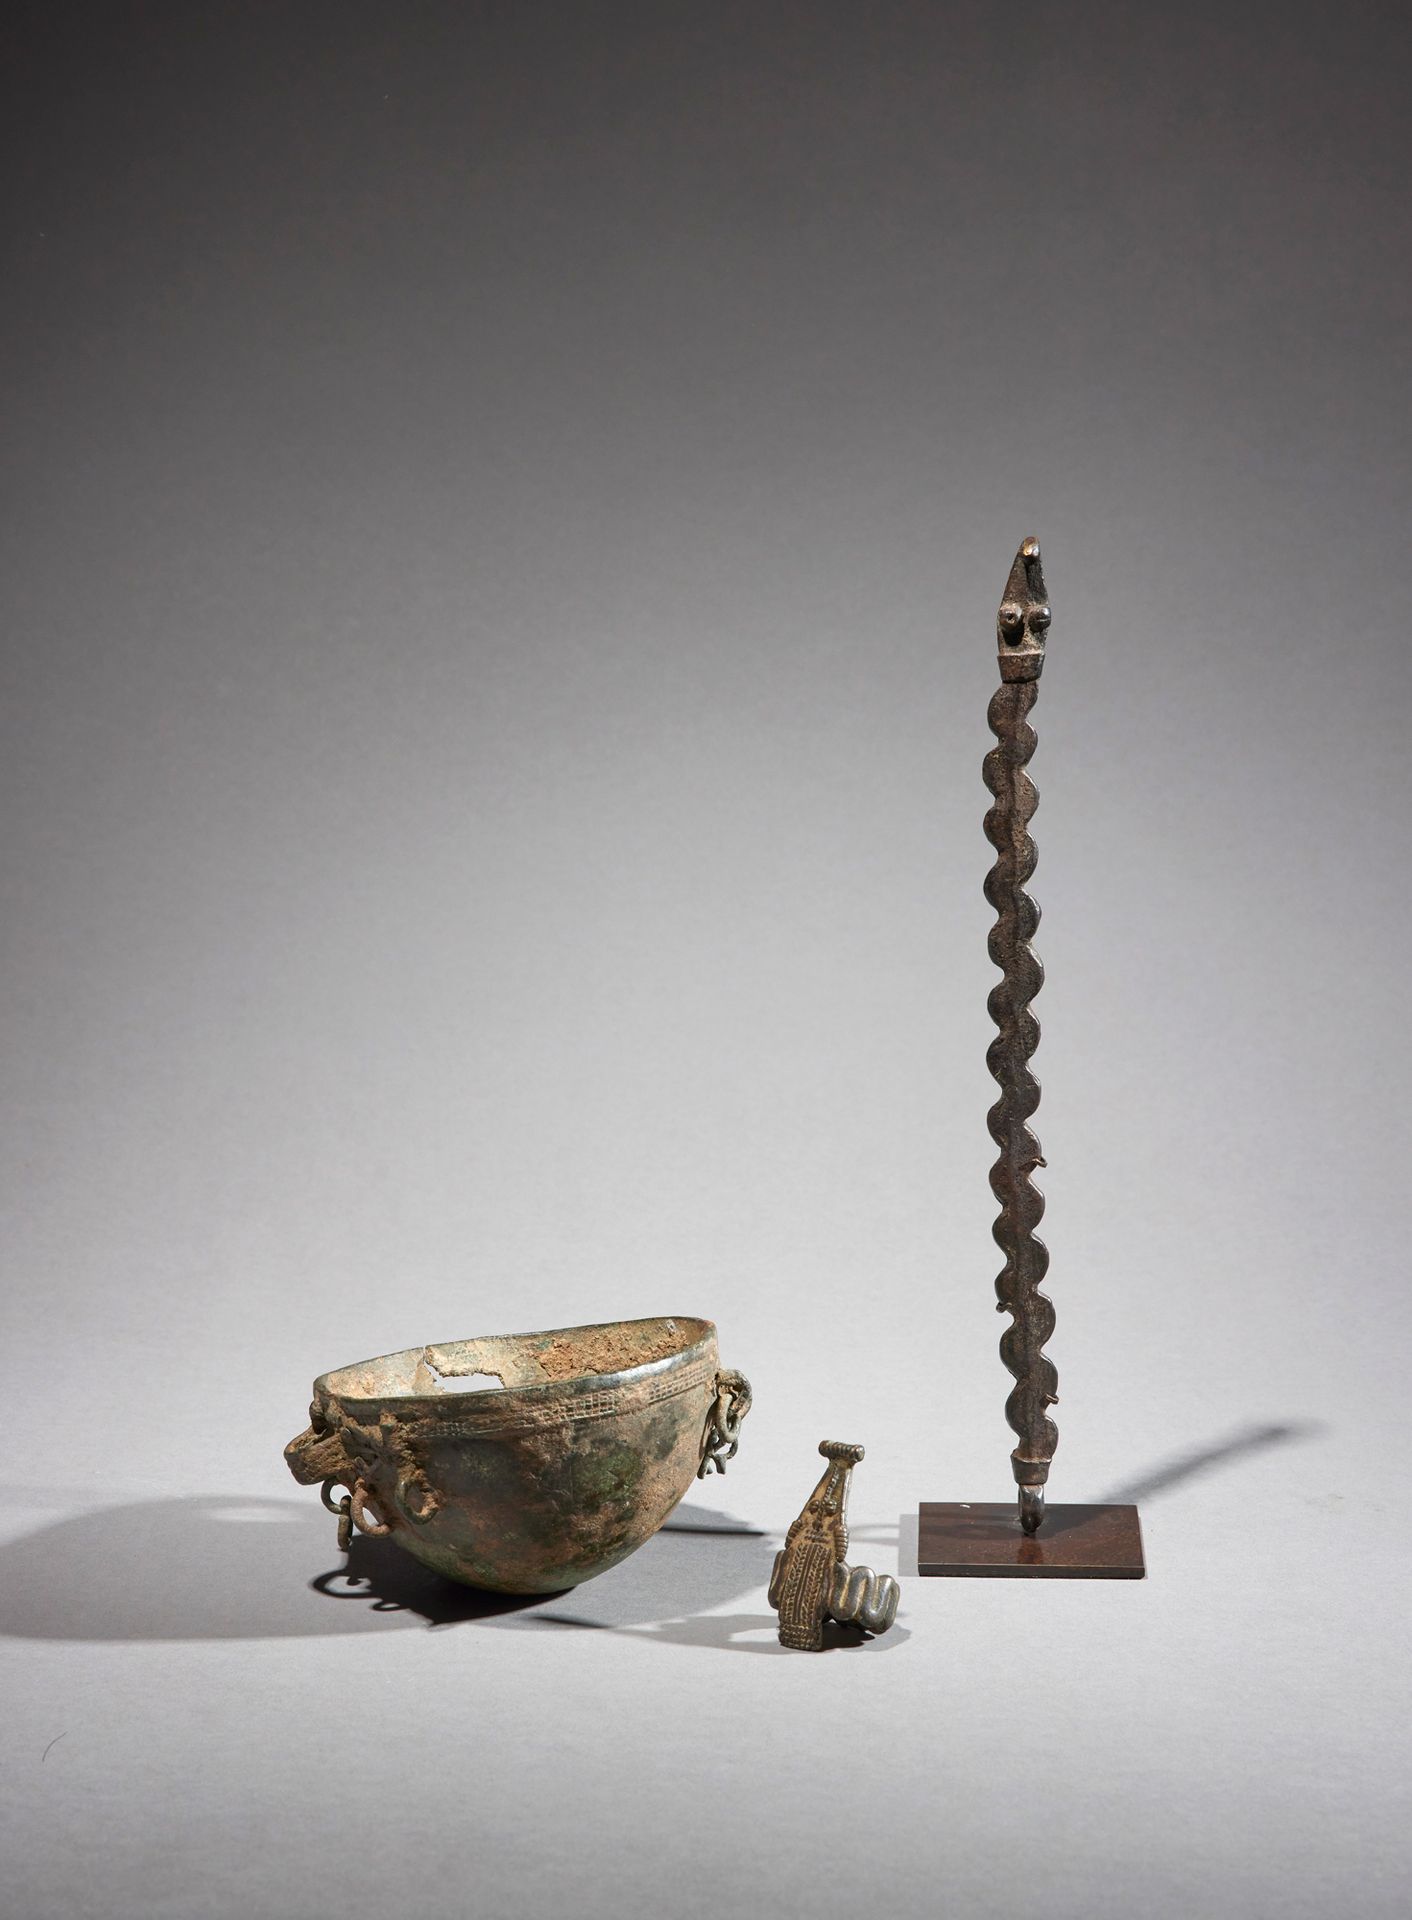 Null 三个甘氏文物

布基纳法索

铜质

长5.3至26.5厘米



一套三件甘州文物，包括一个饰有圆环的碗，一条波浪形的蛇和一个蛇环。